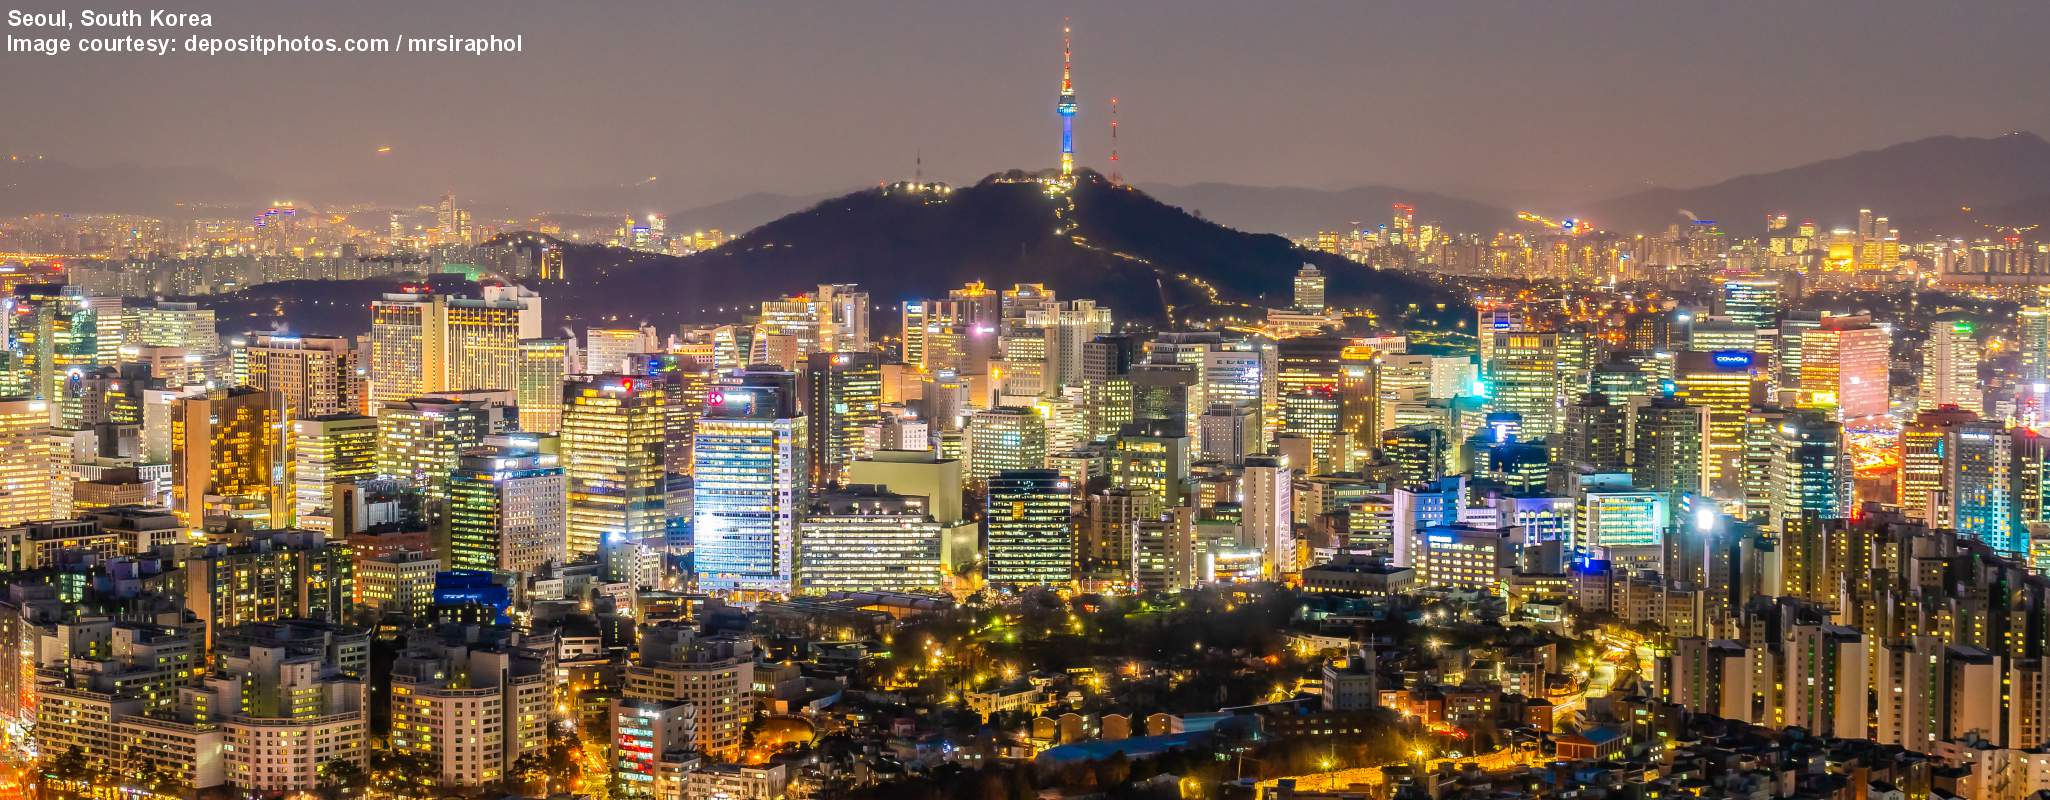 Seoul image